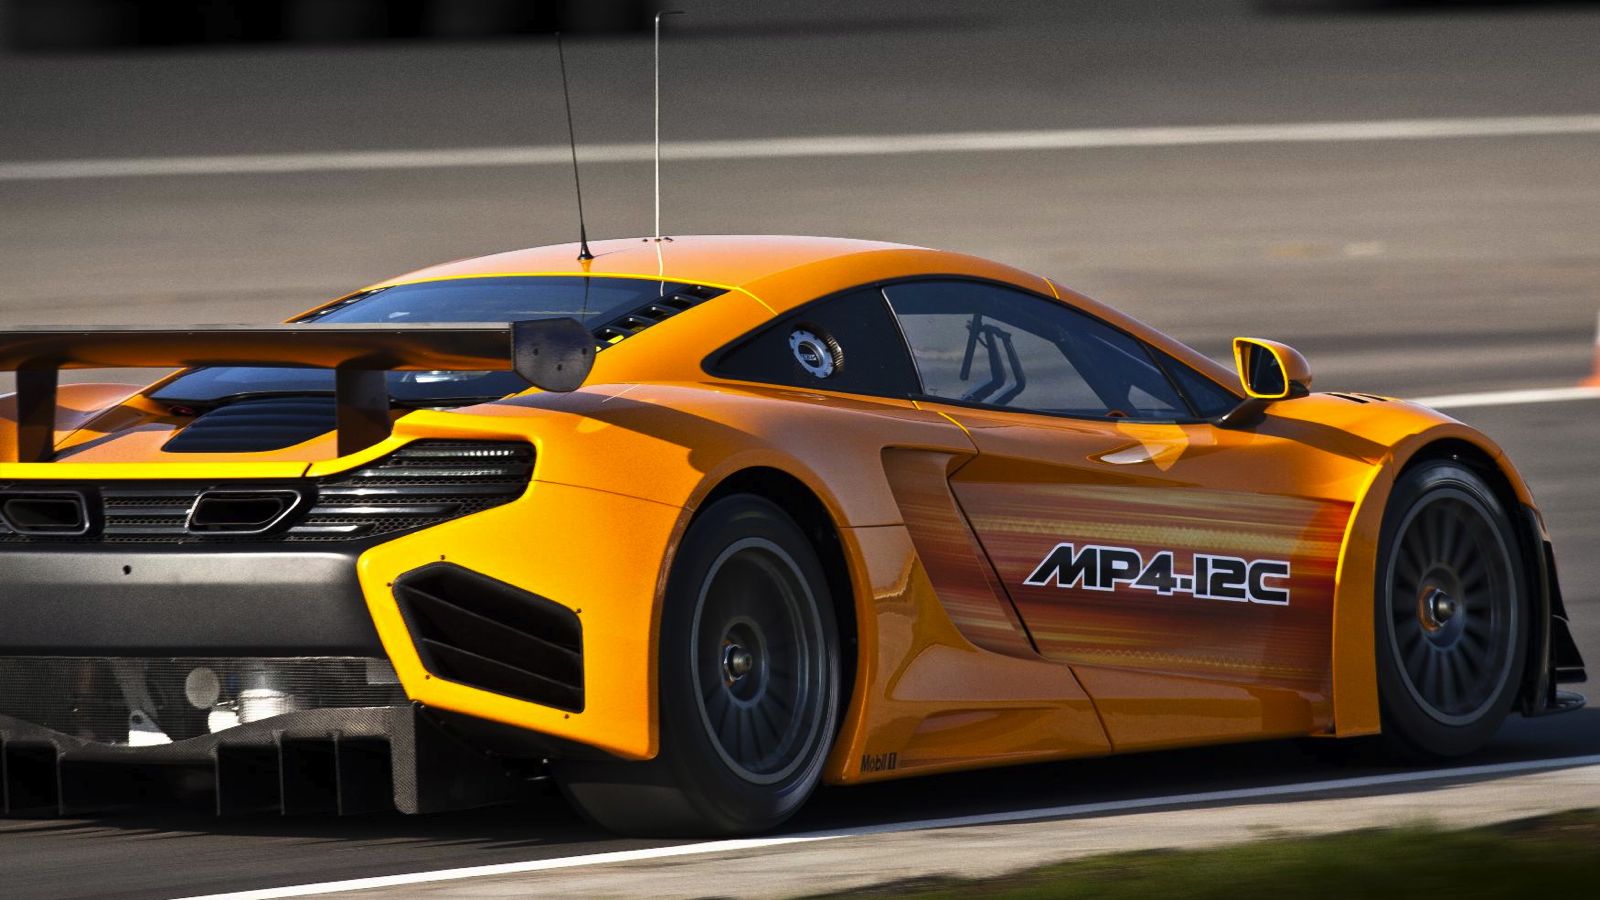 McLaren MP4-12C The Most Advanced GT, Luxury sport cars, mercedes mclaren, mclaren logo, mclaren f1 gtr, mclaren modif, MCLaren sport cars